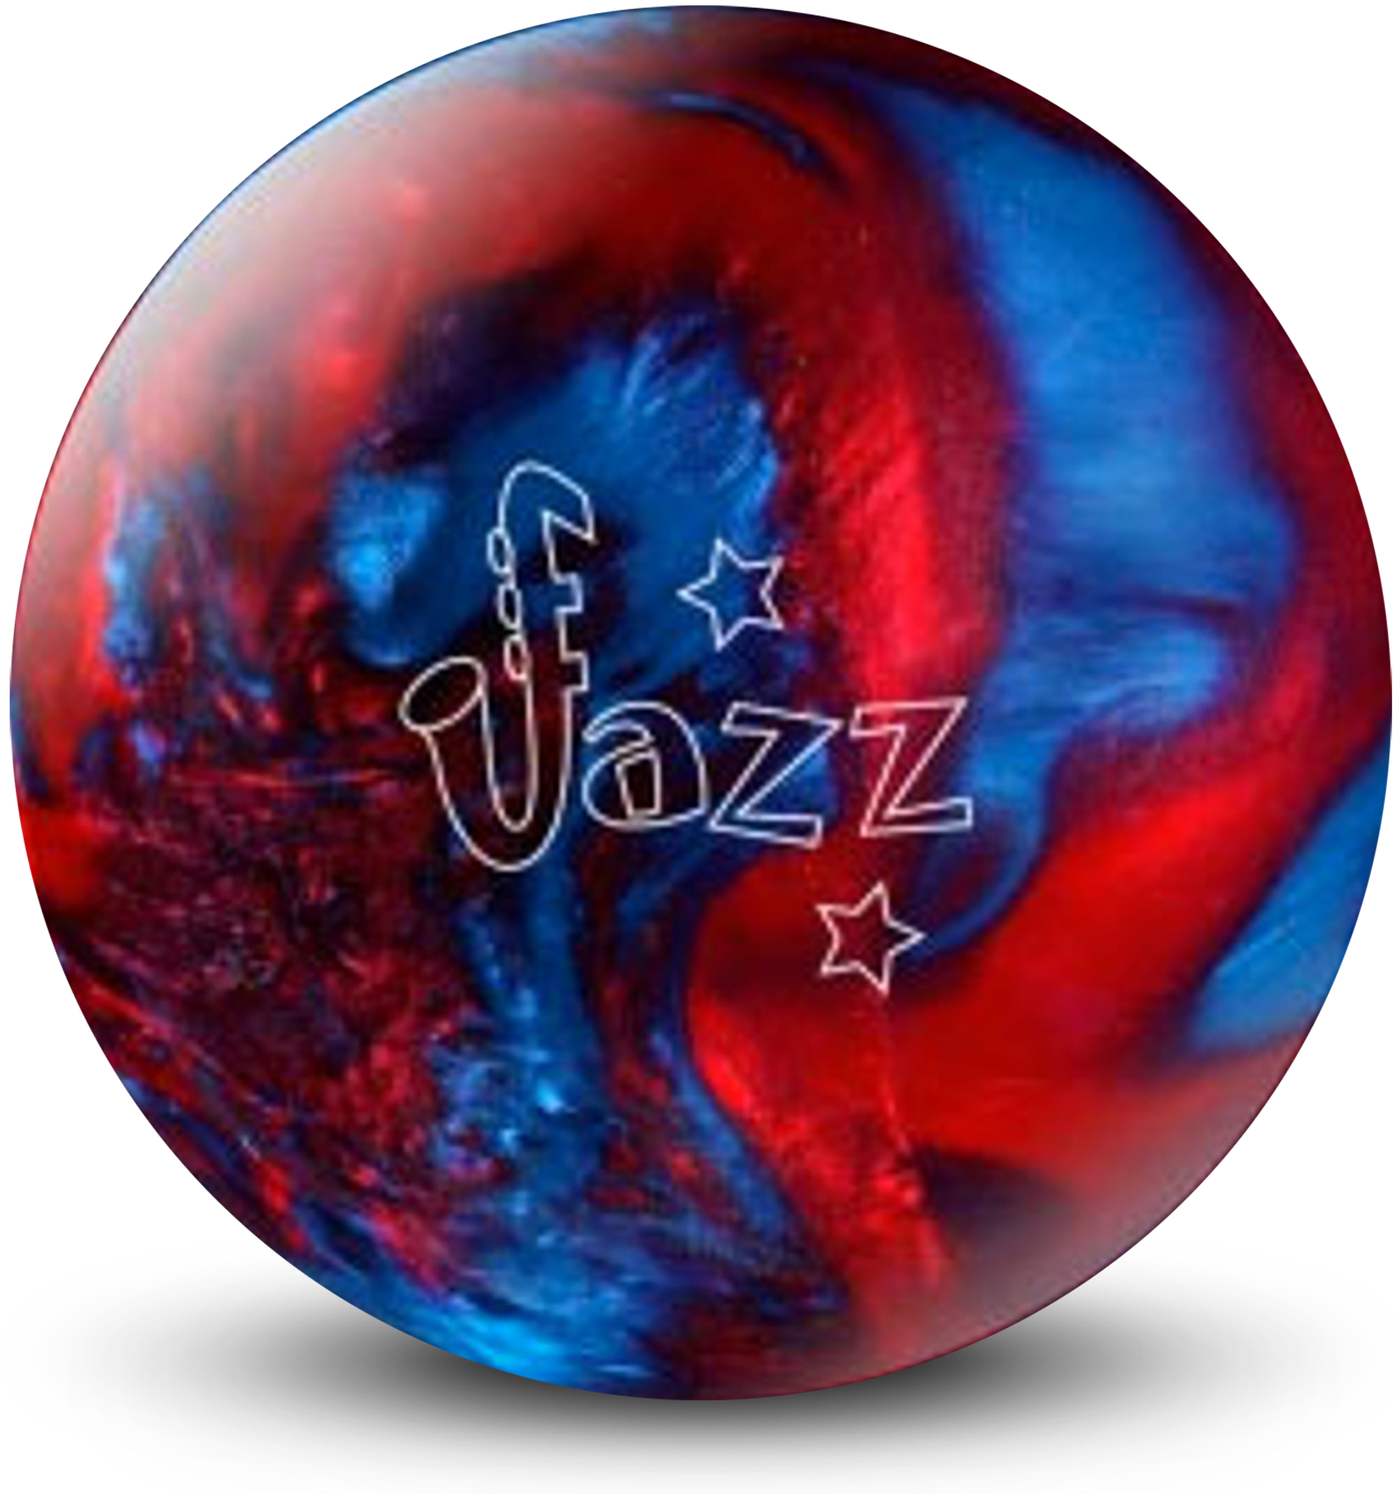 Jazz Red/Blue Bowling Ball